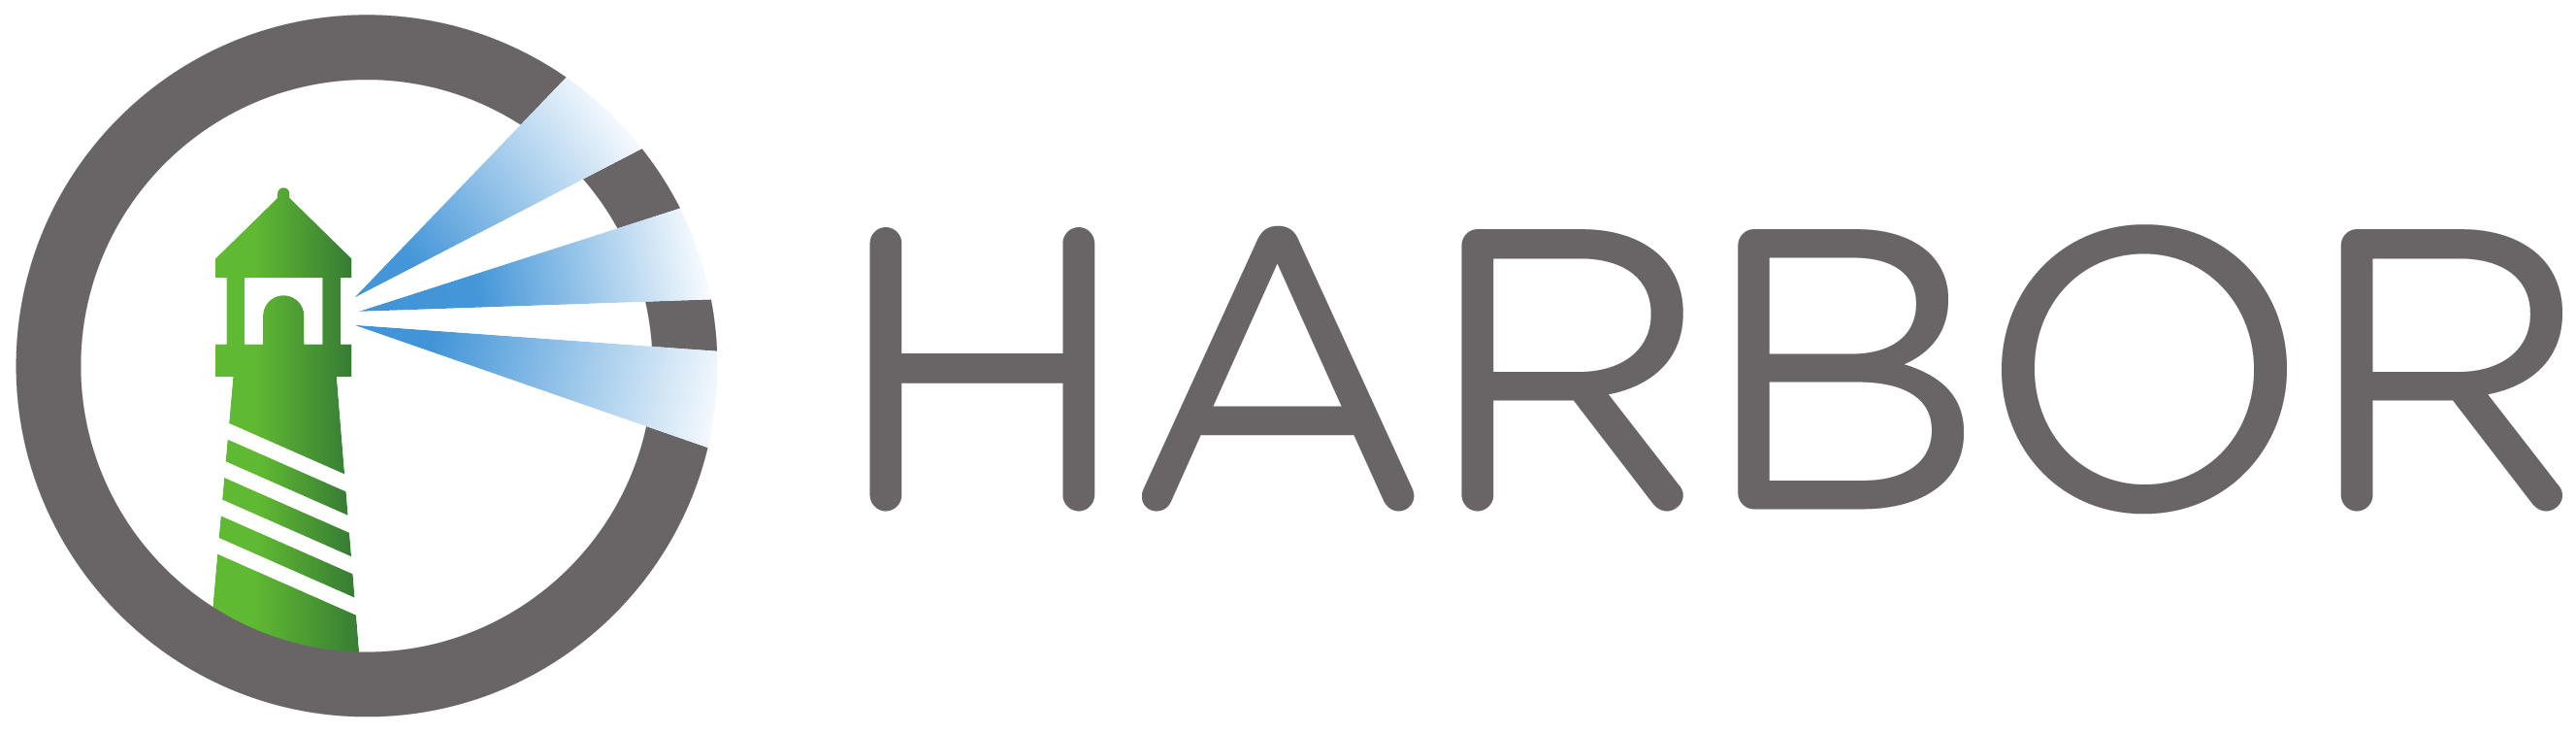 harbor_logo.png